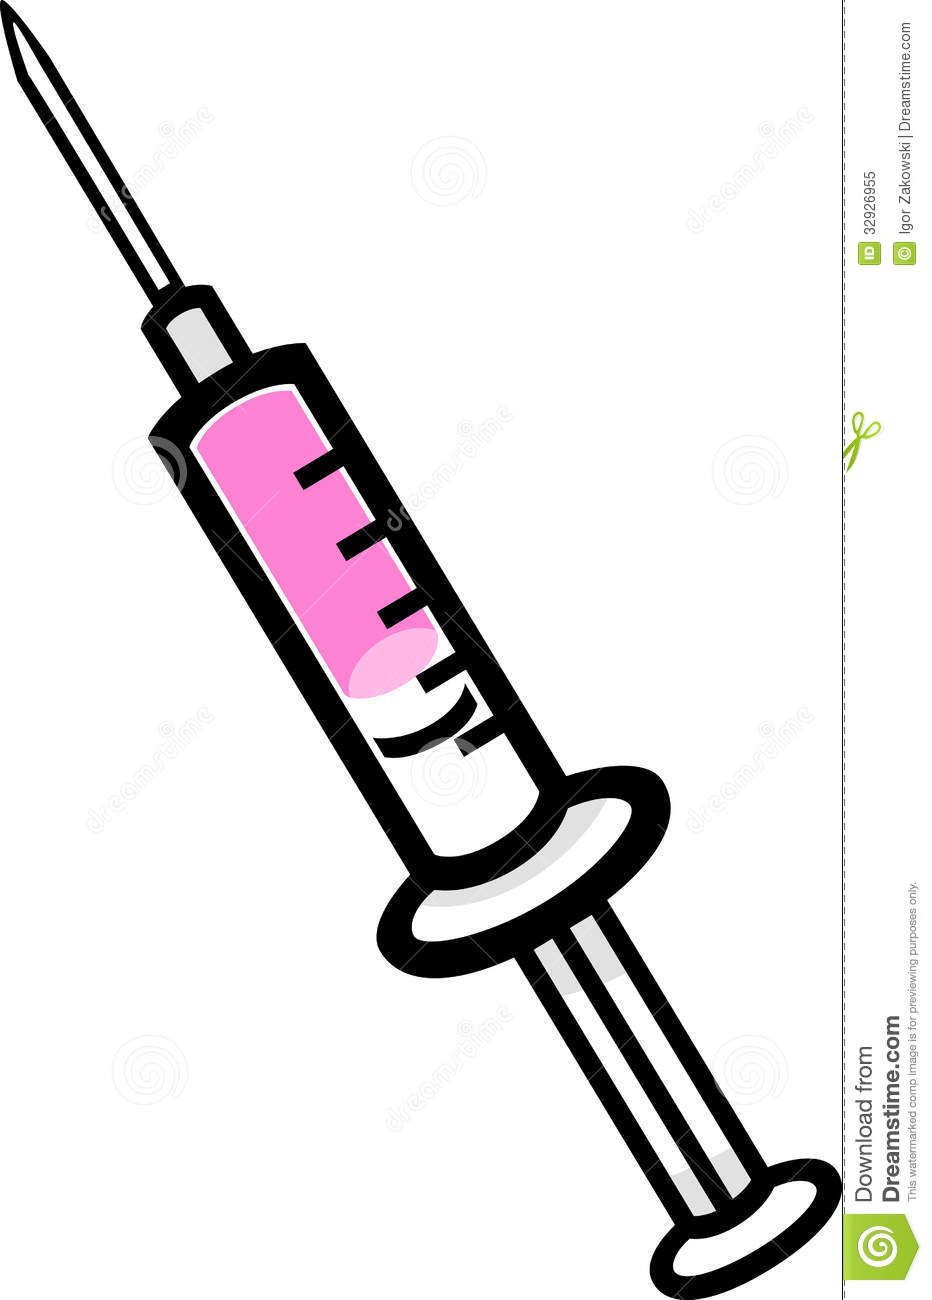 Syringe clip art cartoon illu - Syringe Clipart